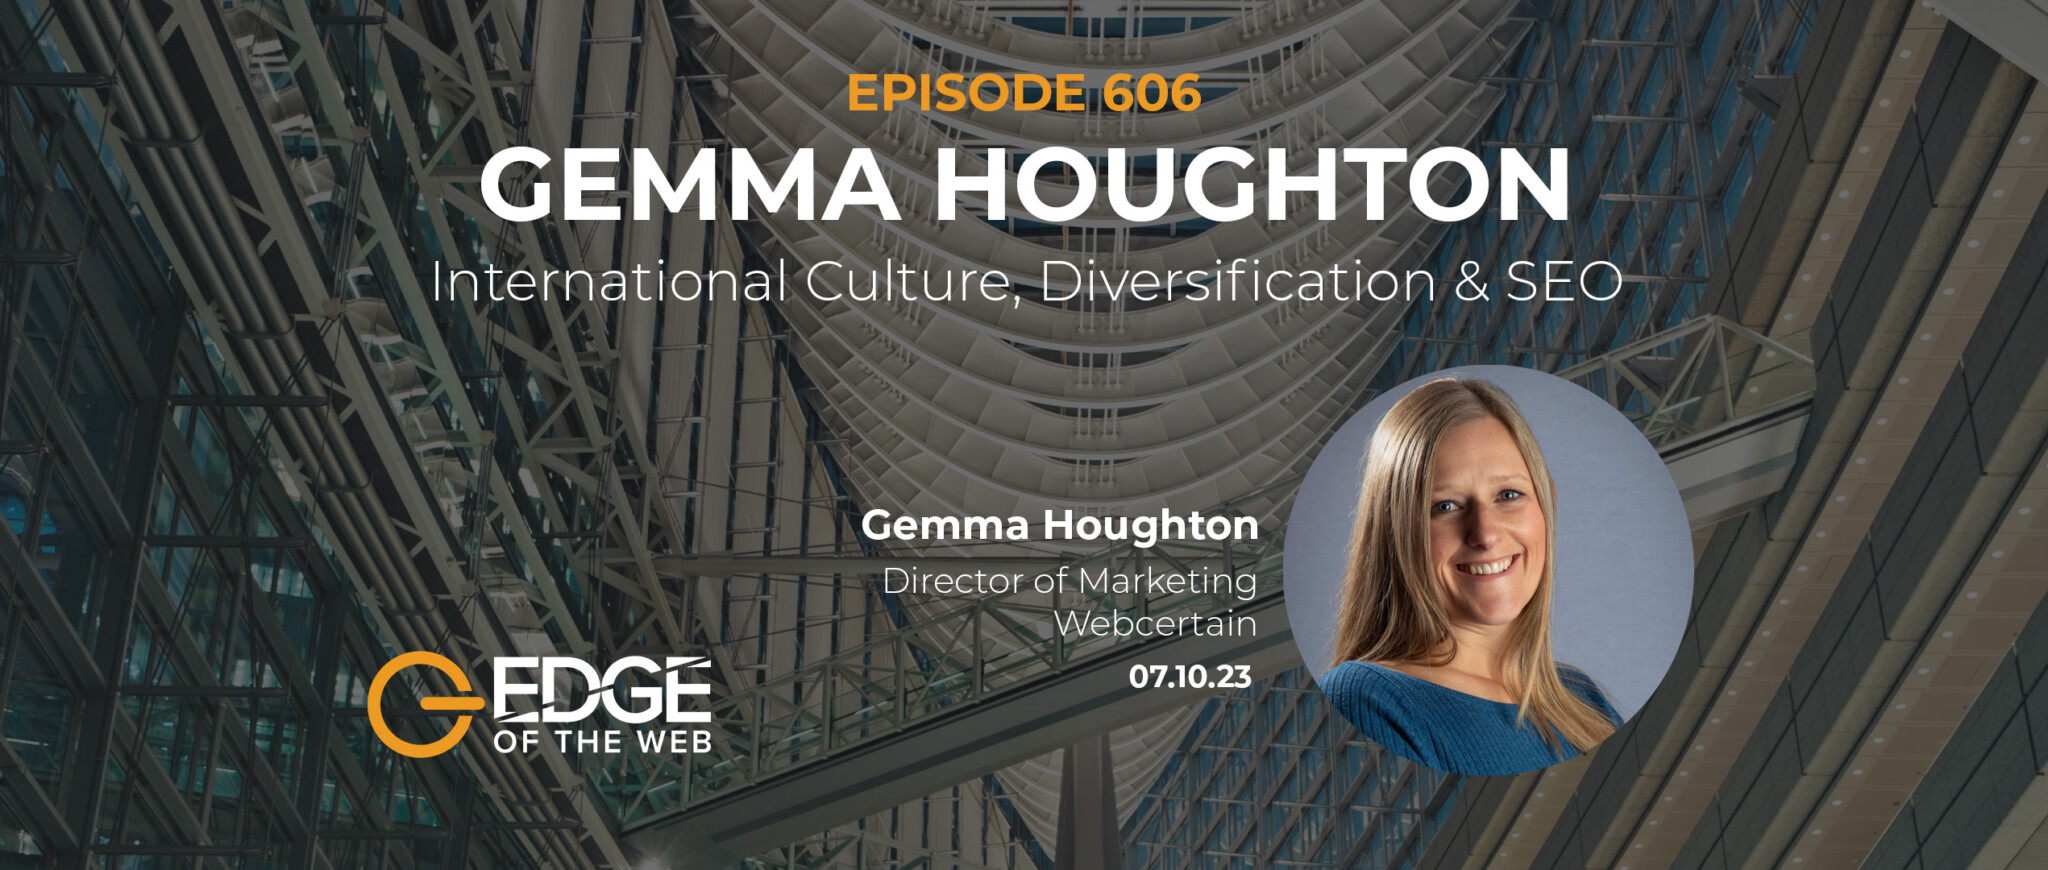 Gemma Houghton - EDGE Episode 606 Featured Image